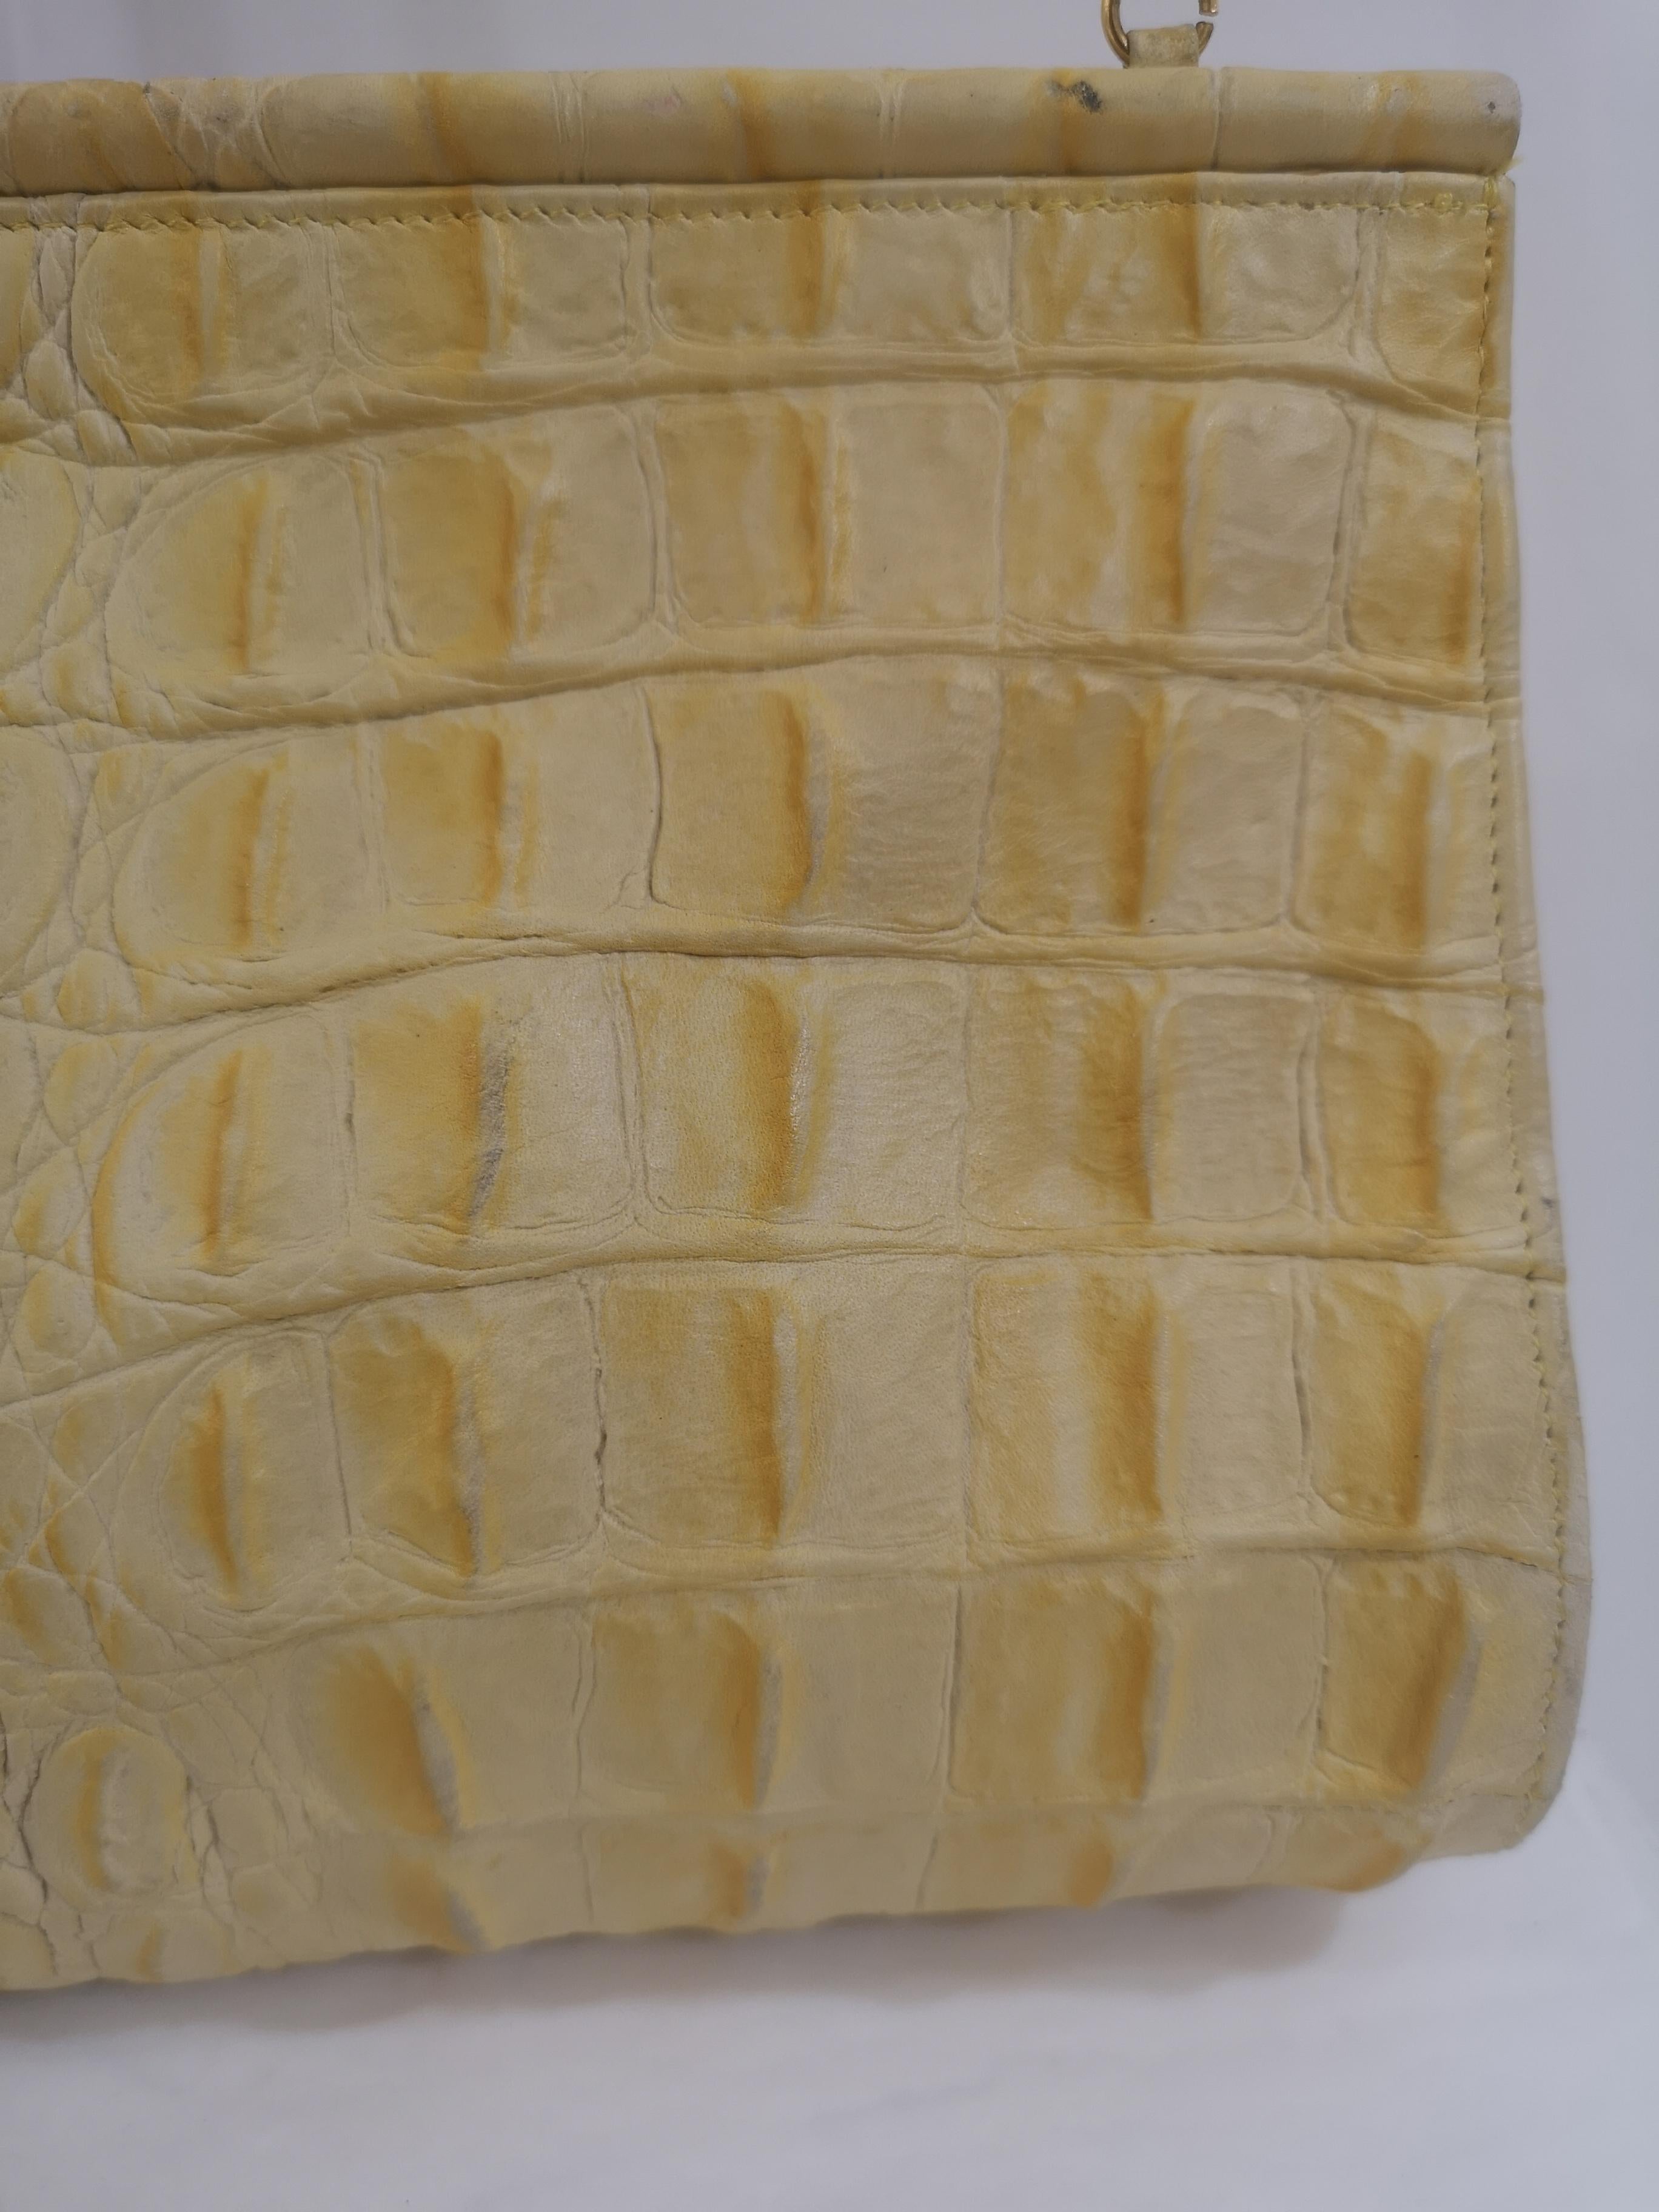 Andrea Pfister yellow crocodile shoulder bag
measurements: 30 * 17 cm * 6 cm depth